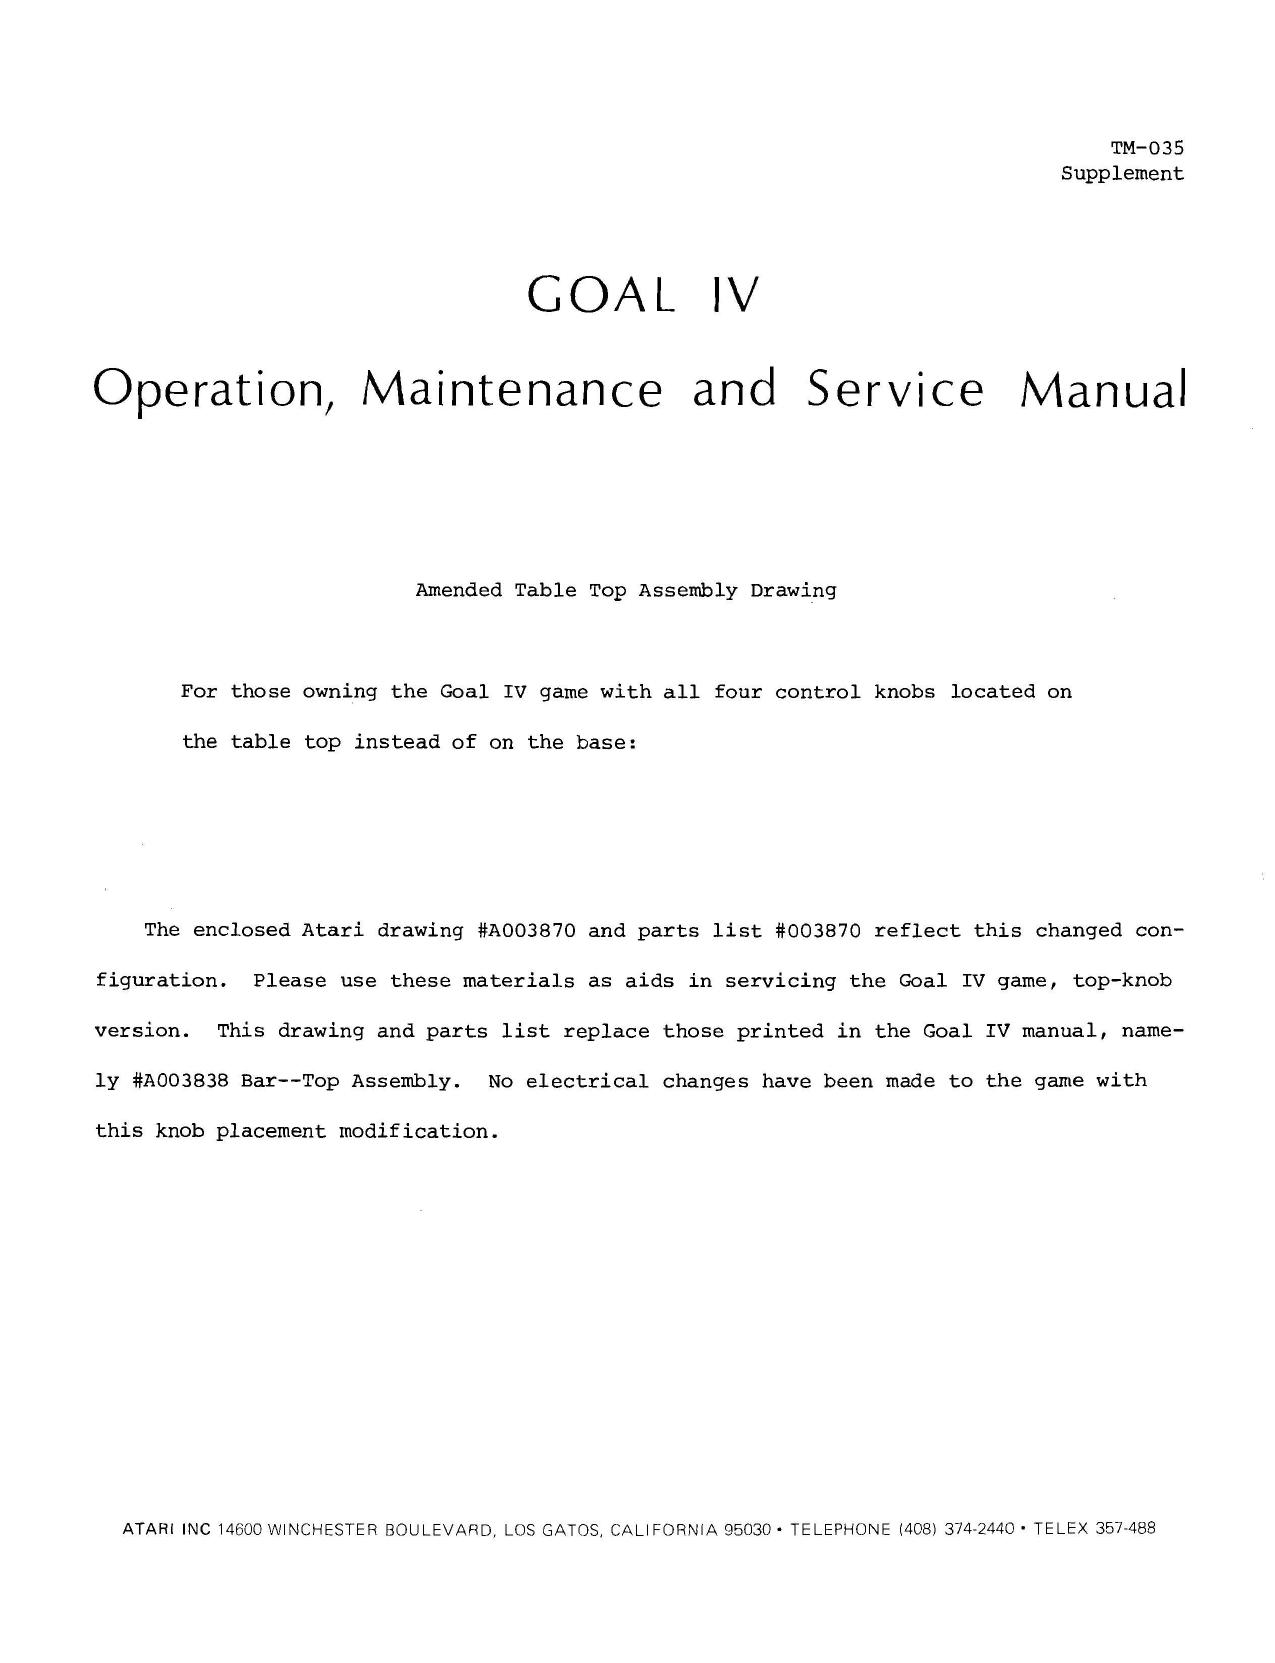 Goal IV TM-035 Supplement